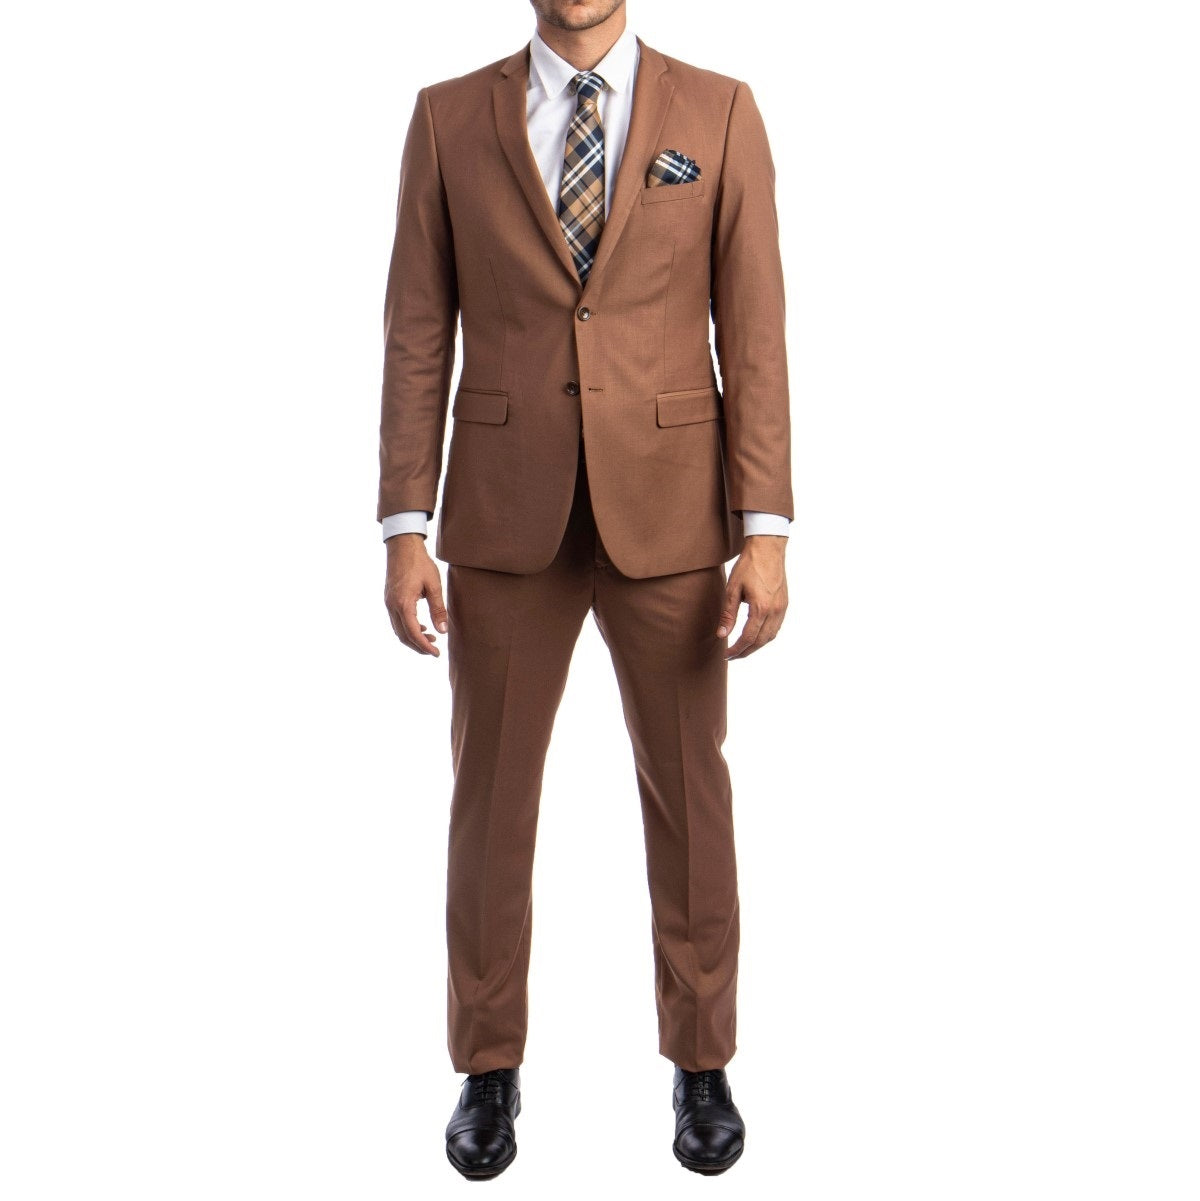 Traje Formal para Hombre TA-M085S-17 Light Brown - Formal Suit for Men